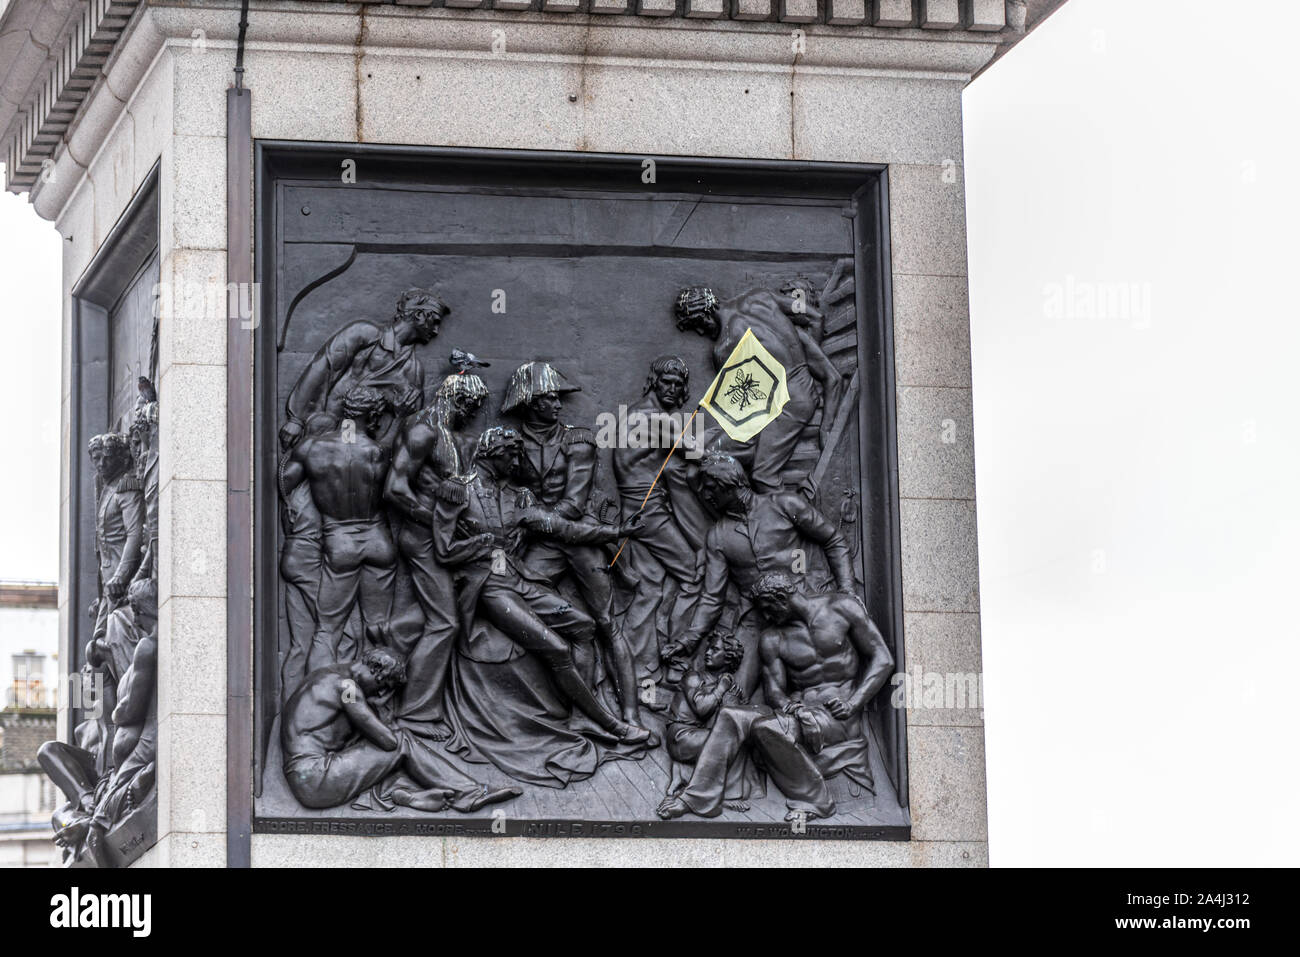 Aussterben Rebellion Morgendunst am Trafalgar Square, London, UK. Protest Camp. Fahne Flagge auf Bronze Fries der Nelson's Column Stockfoto